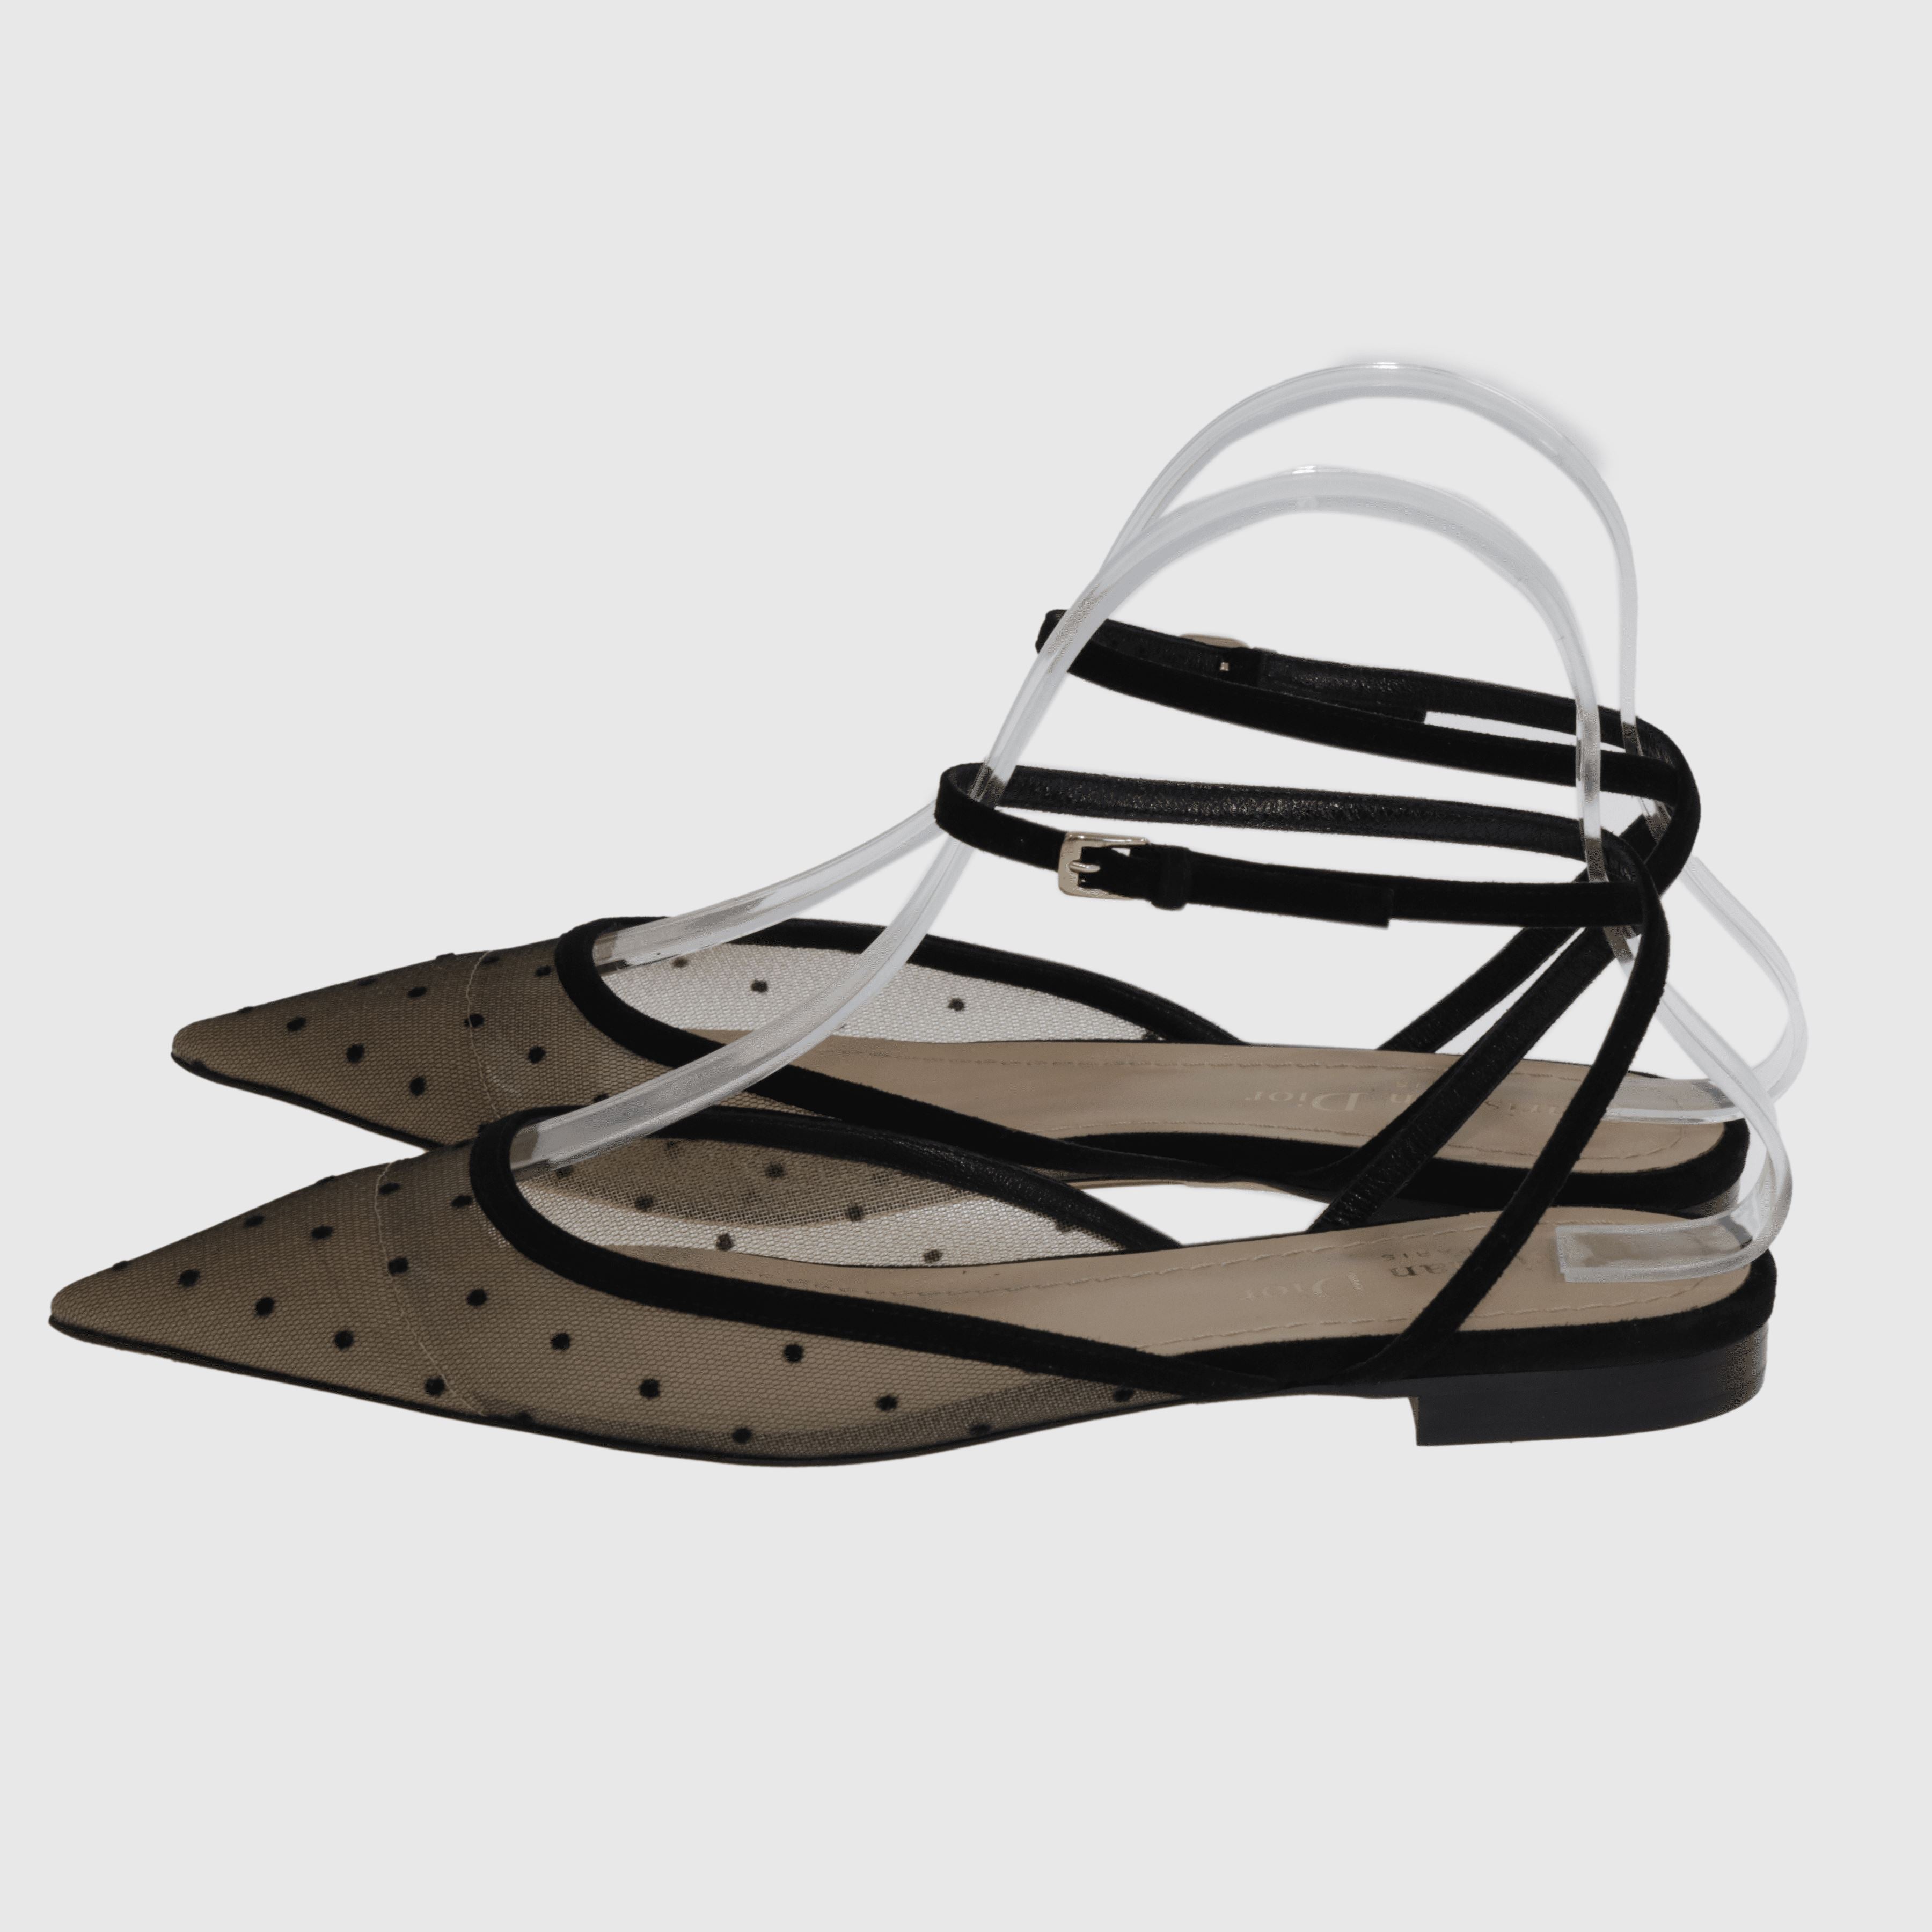 Black Mesh Polka Dot Ankle Strap Flat Sandals Shoes Christian Dior 